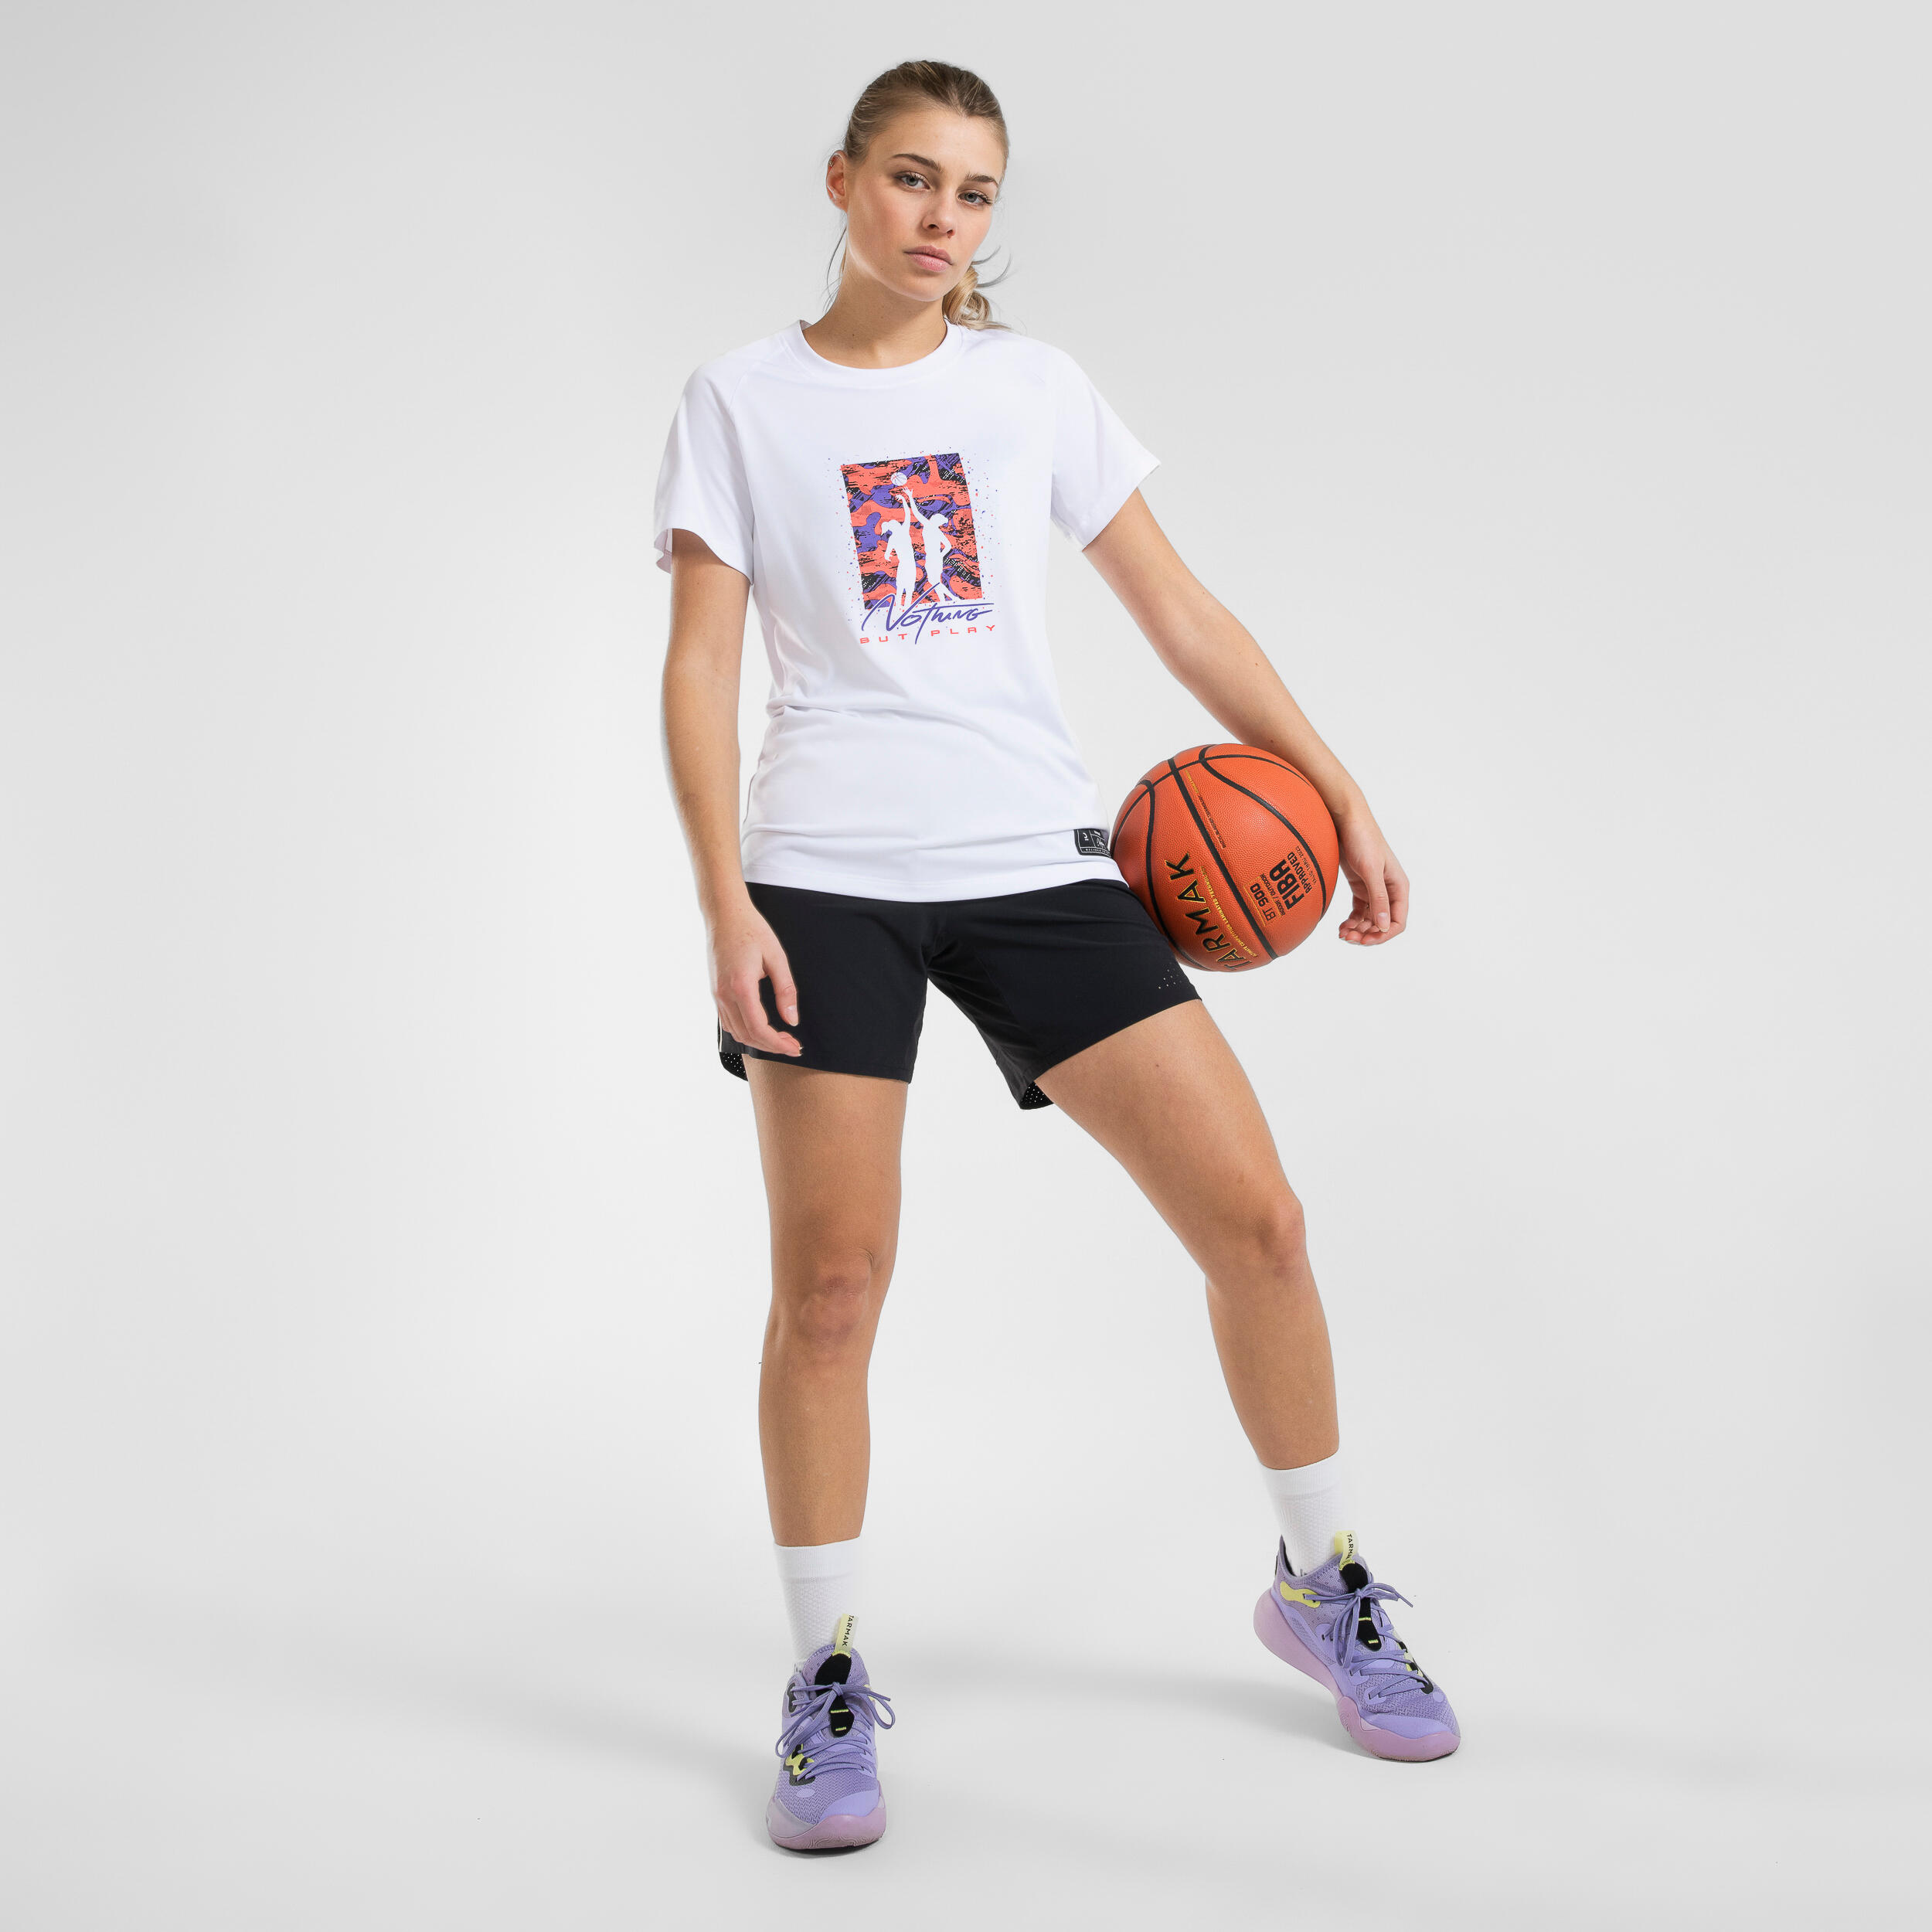 Women's Intermediate Basketball T-Shirt / Jersey TS500 - White 4/4